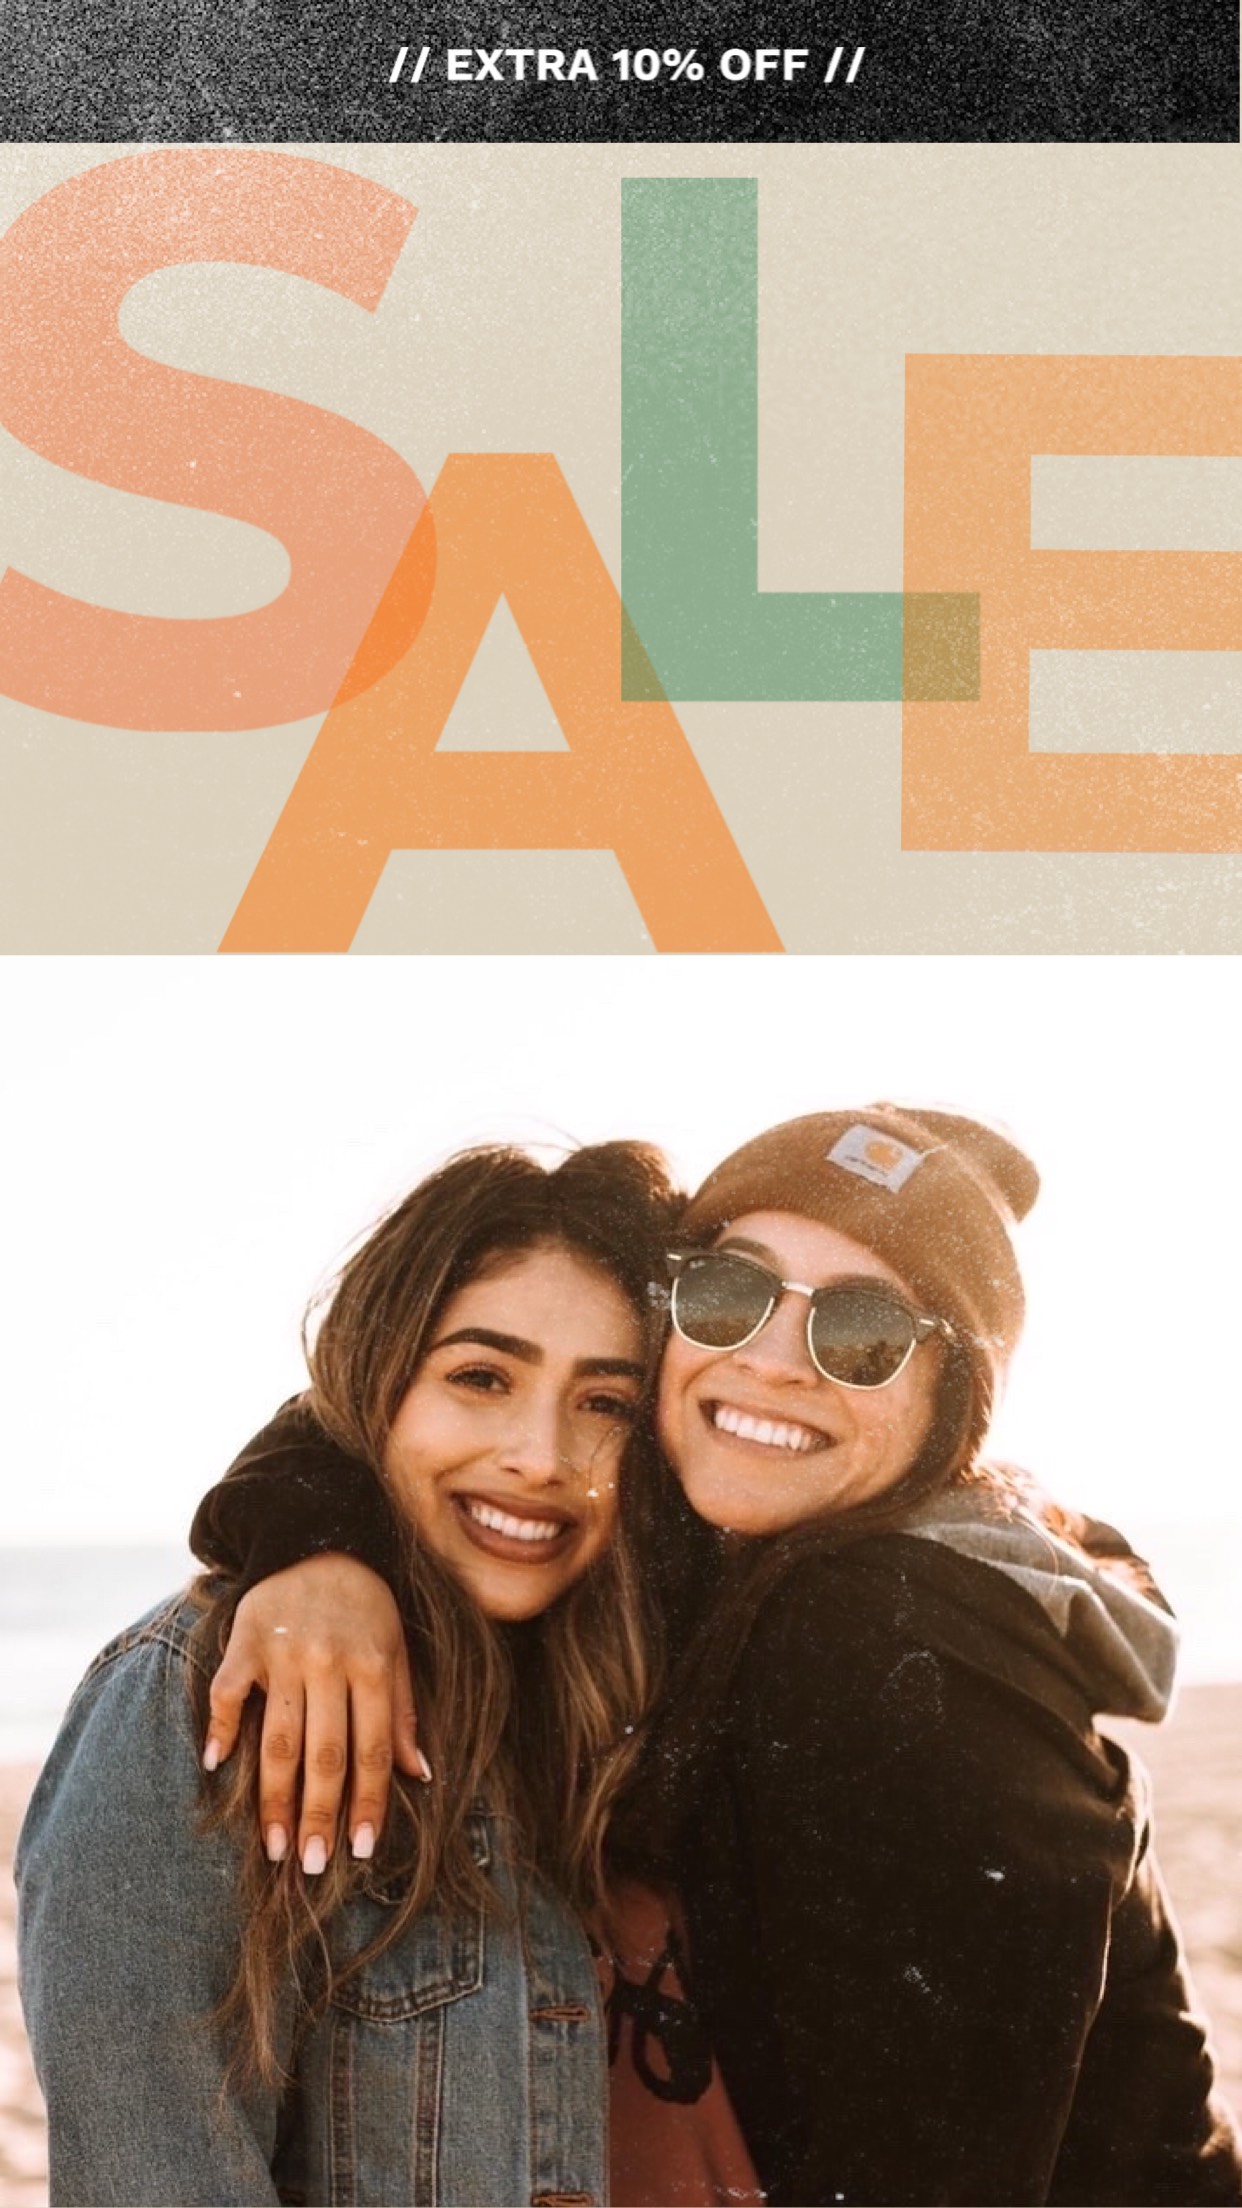 Friends hugging in the sun sale flyer template